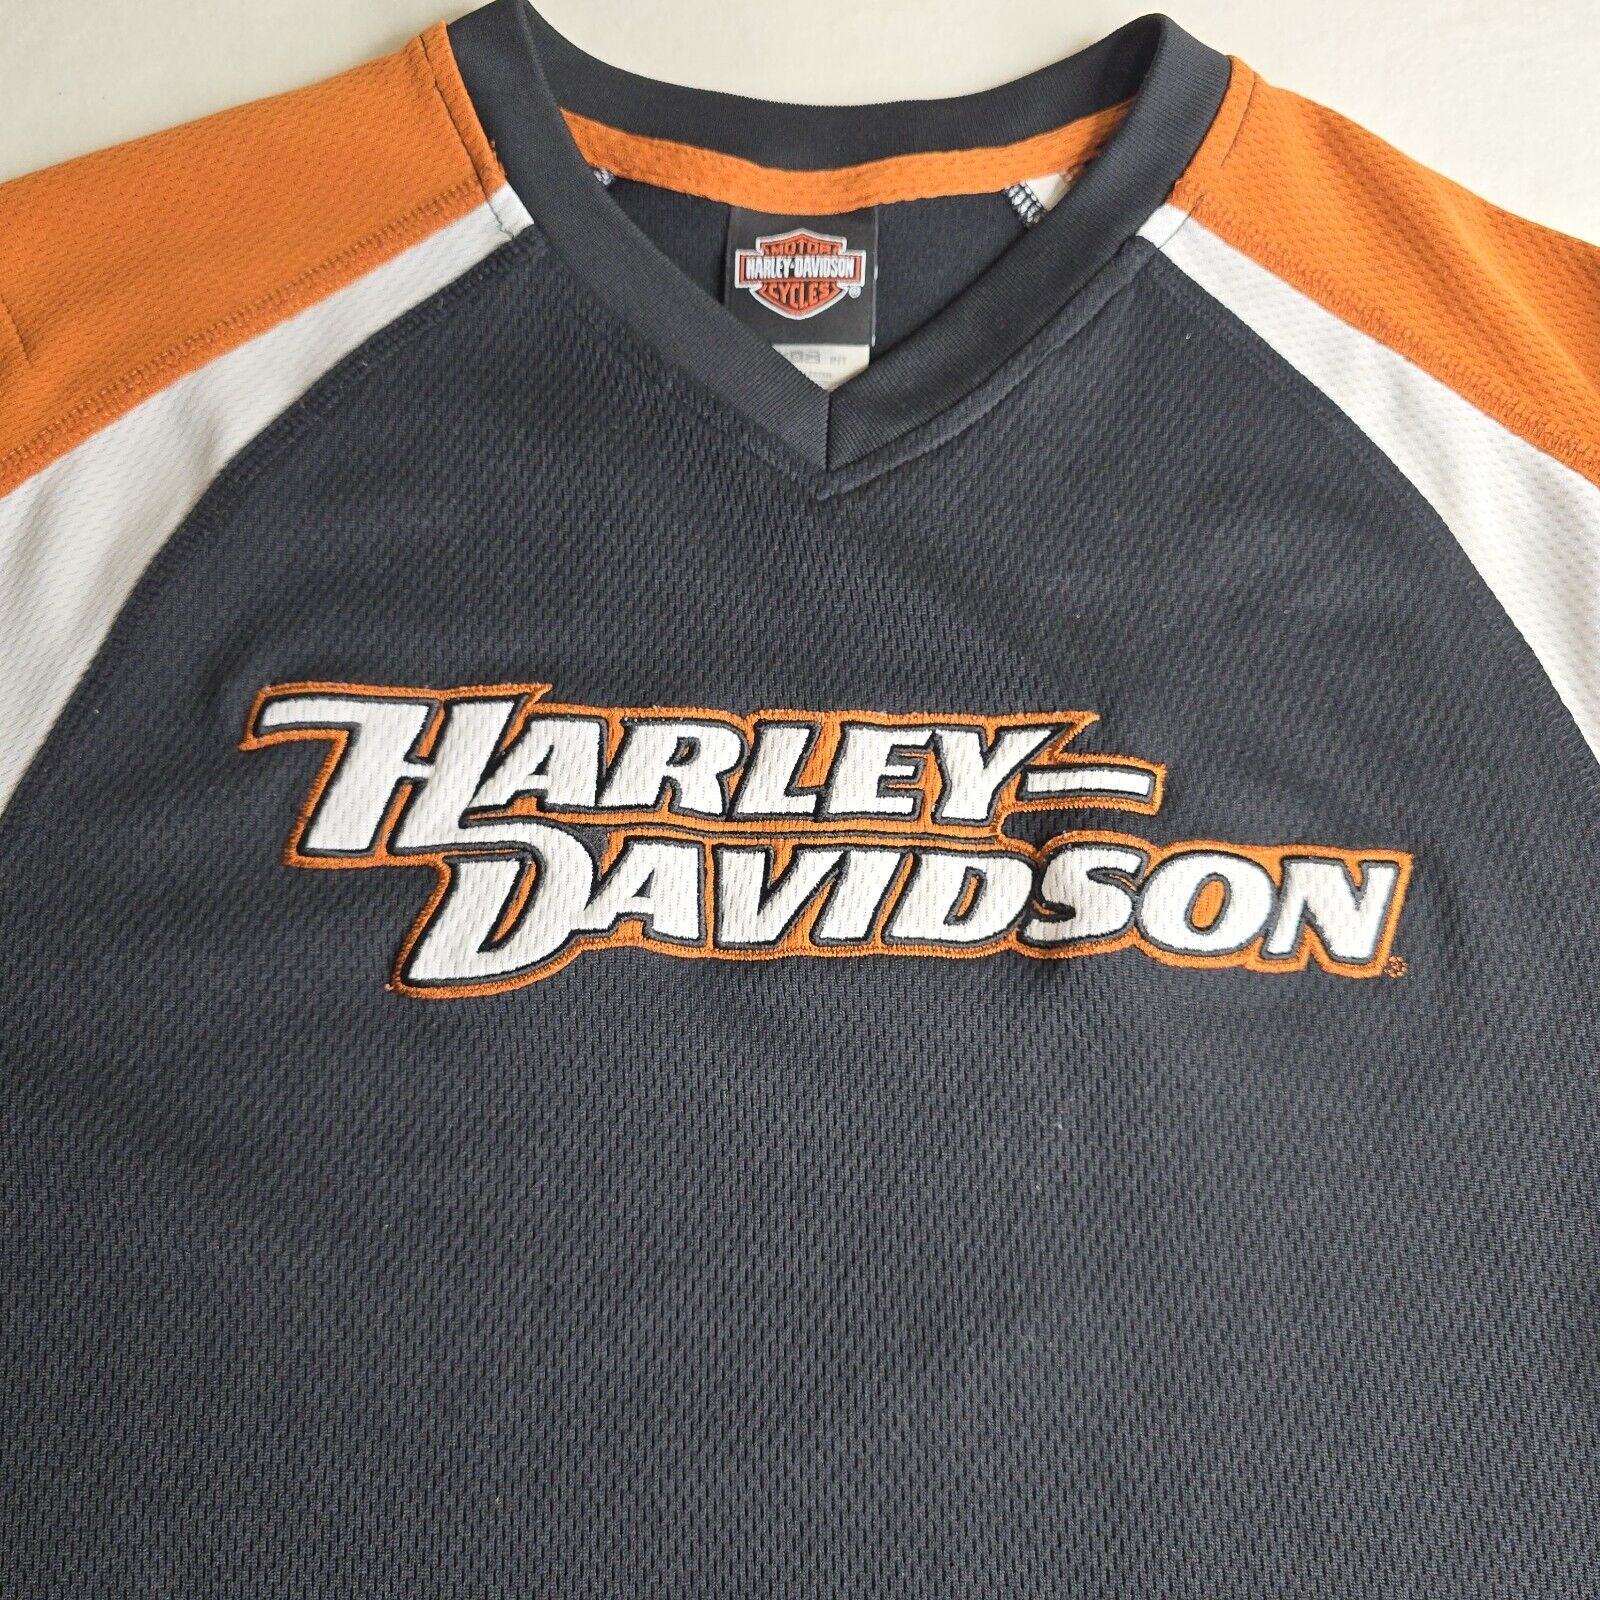 Harley Davidson Men's Black/Orange Logo V-Neck Size Large